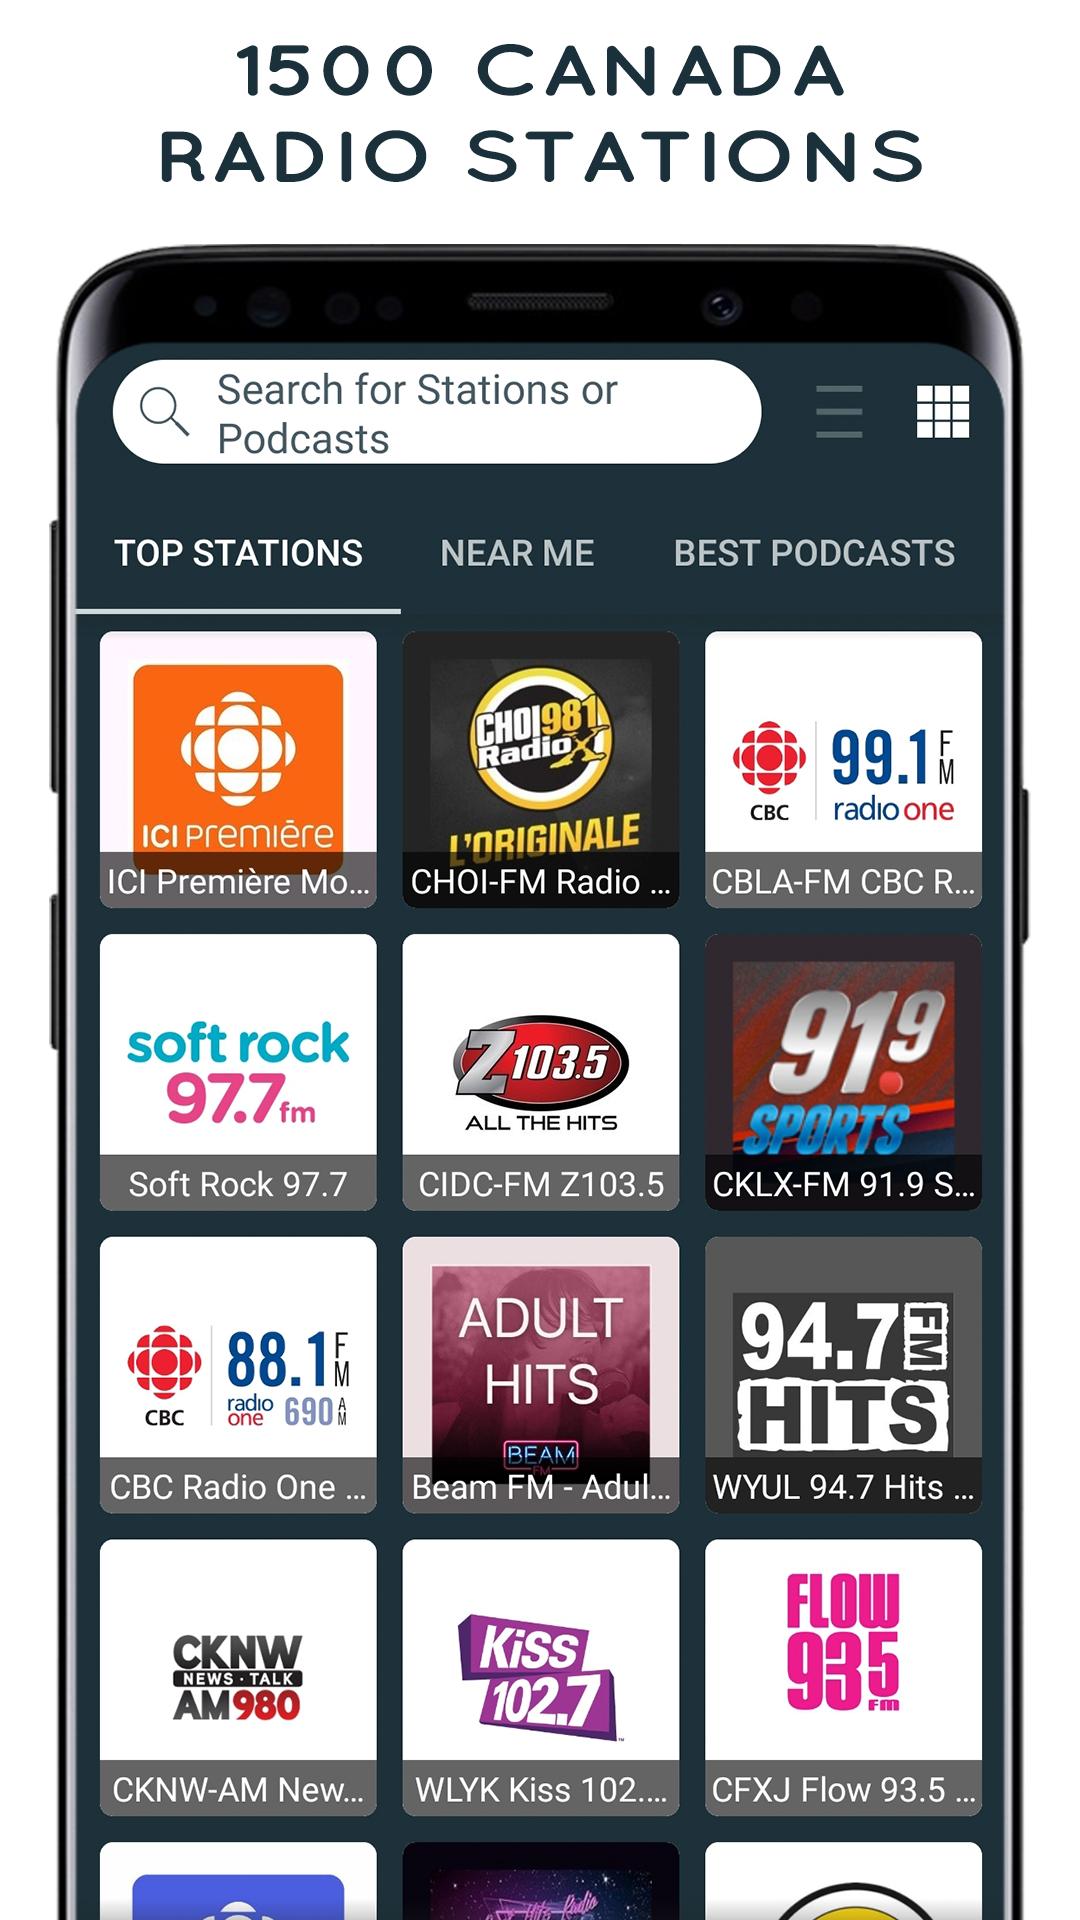 Radio Canada - Internet Radio App for Android - APK Download